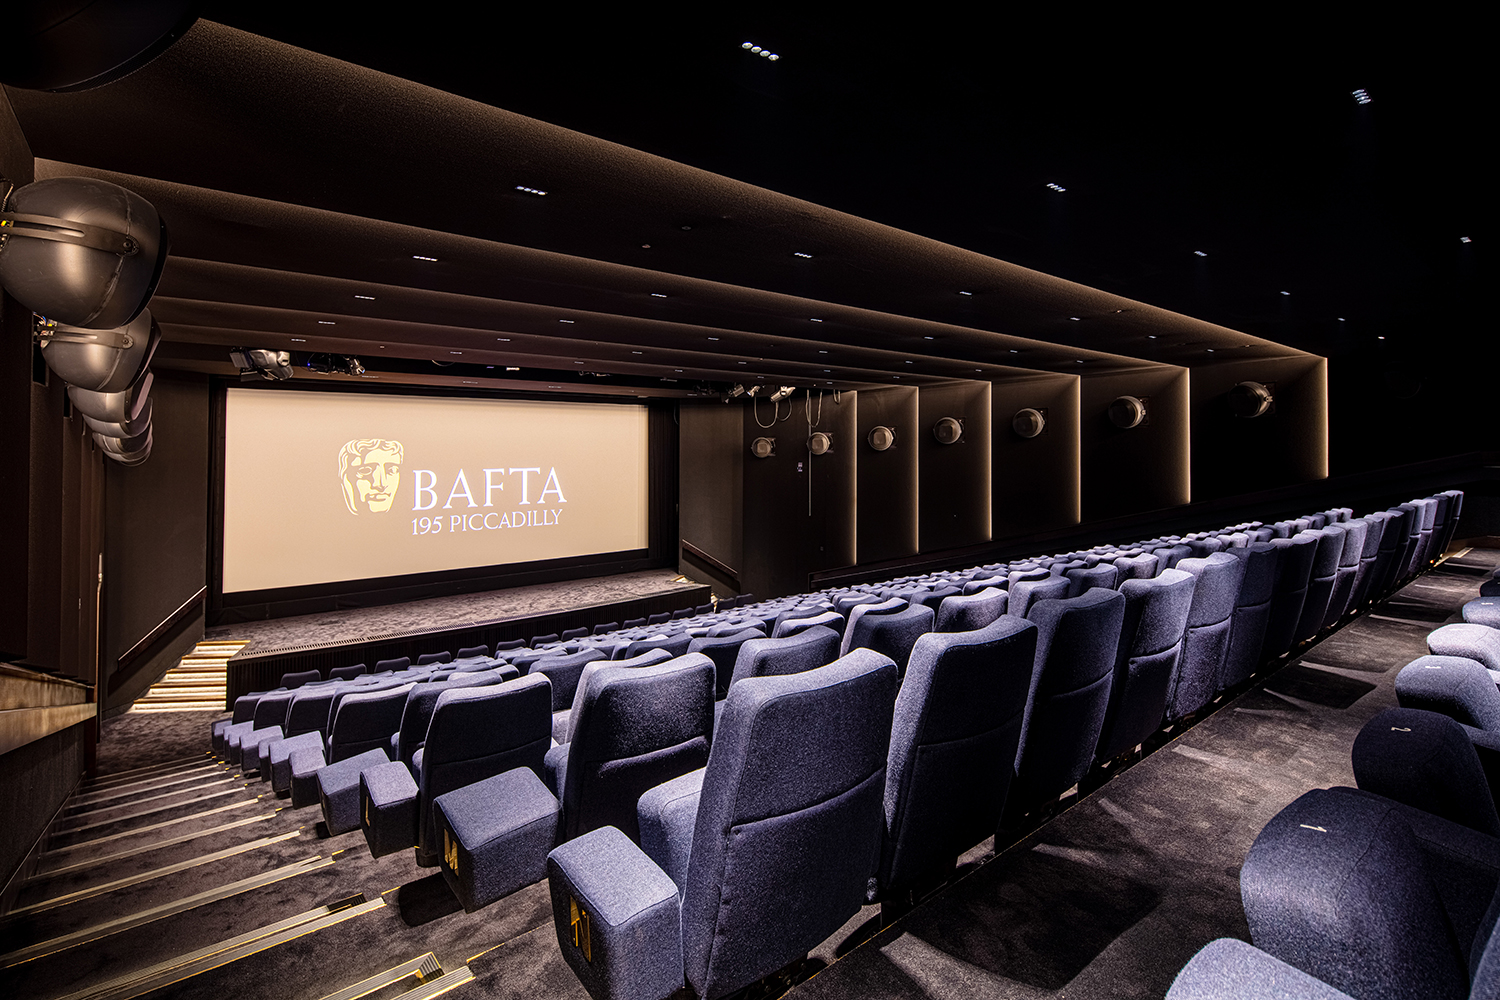 Princess Anne Theater at BAFTA Headquarters in London